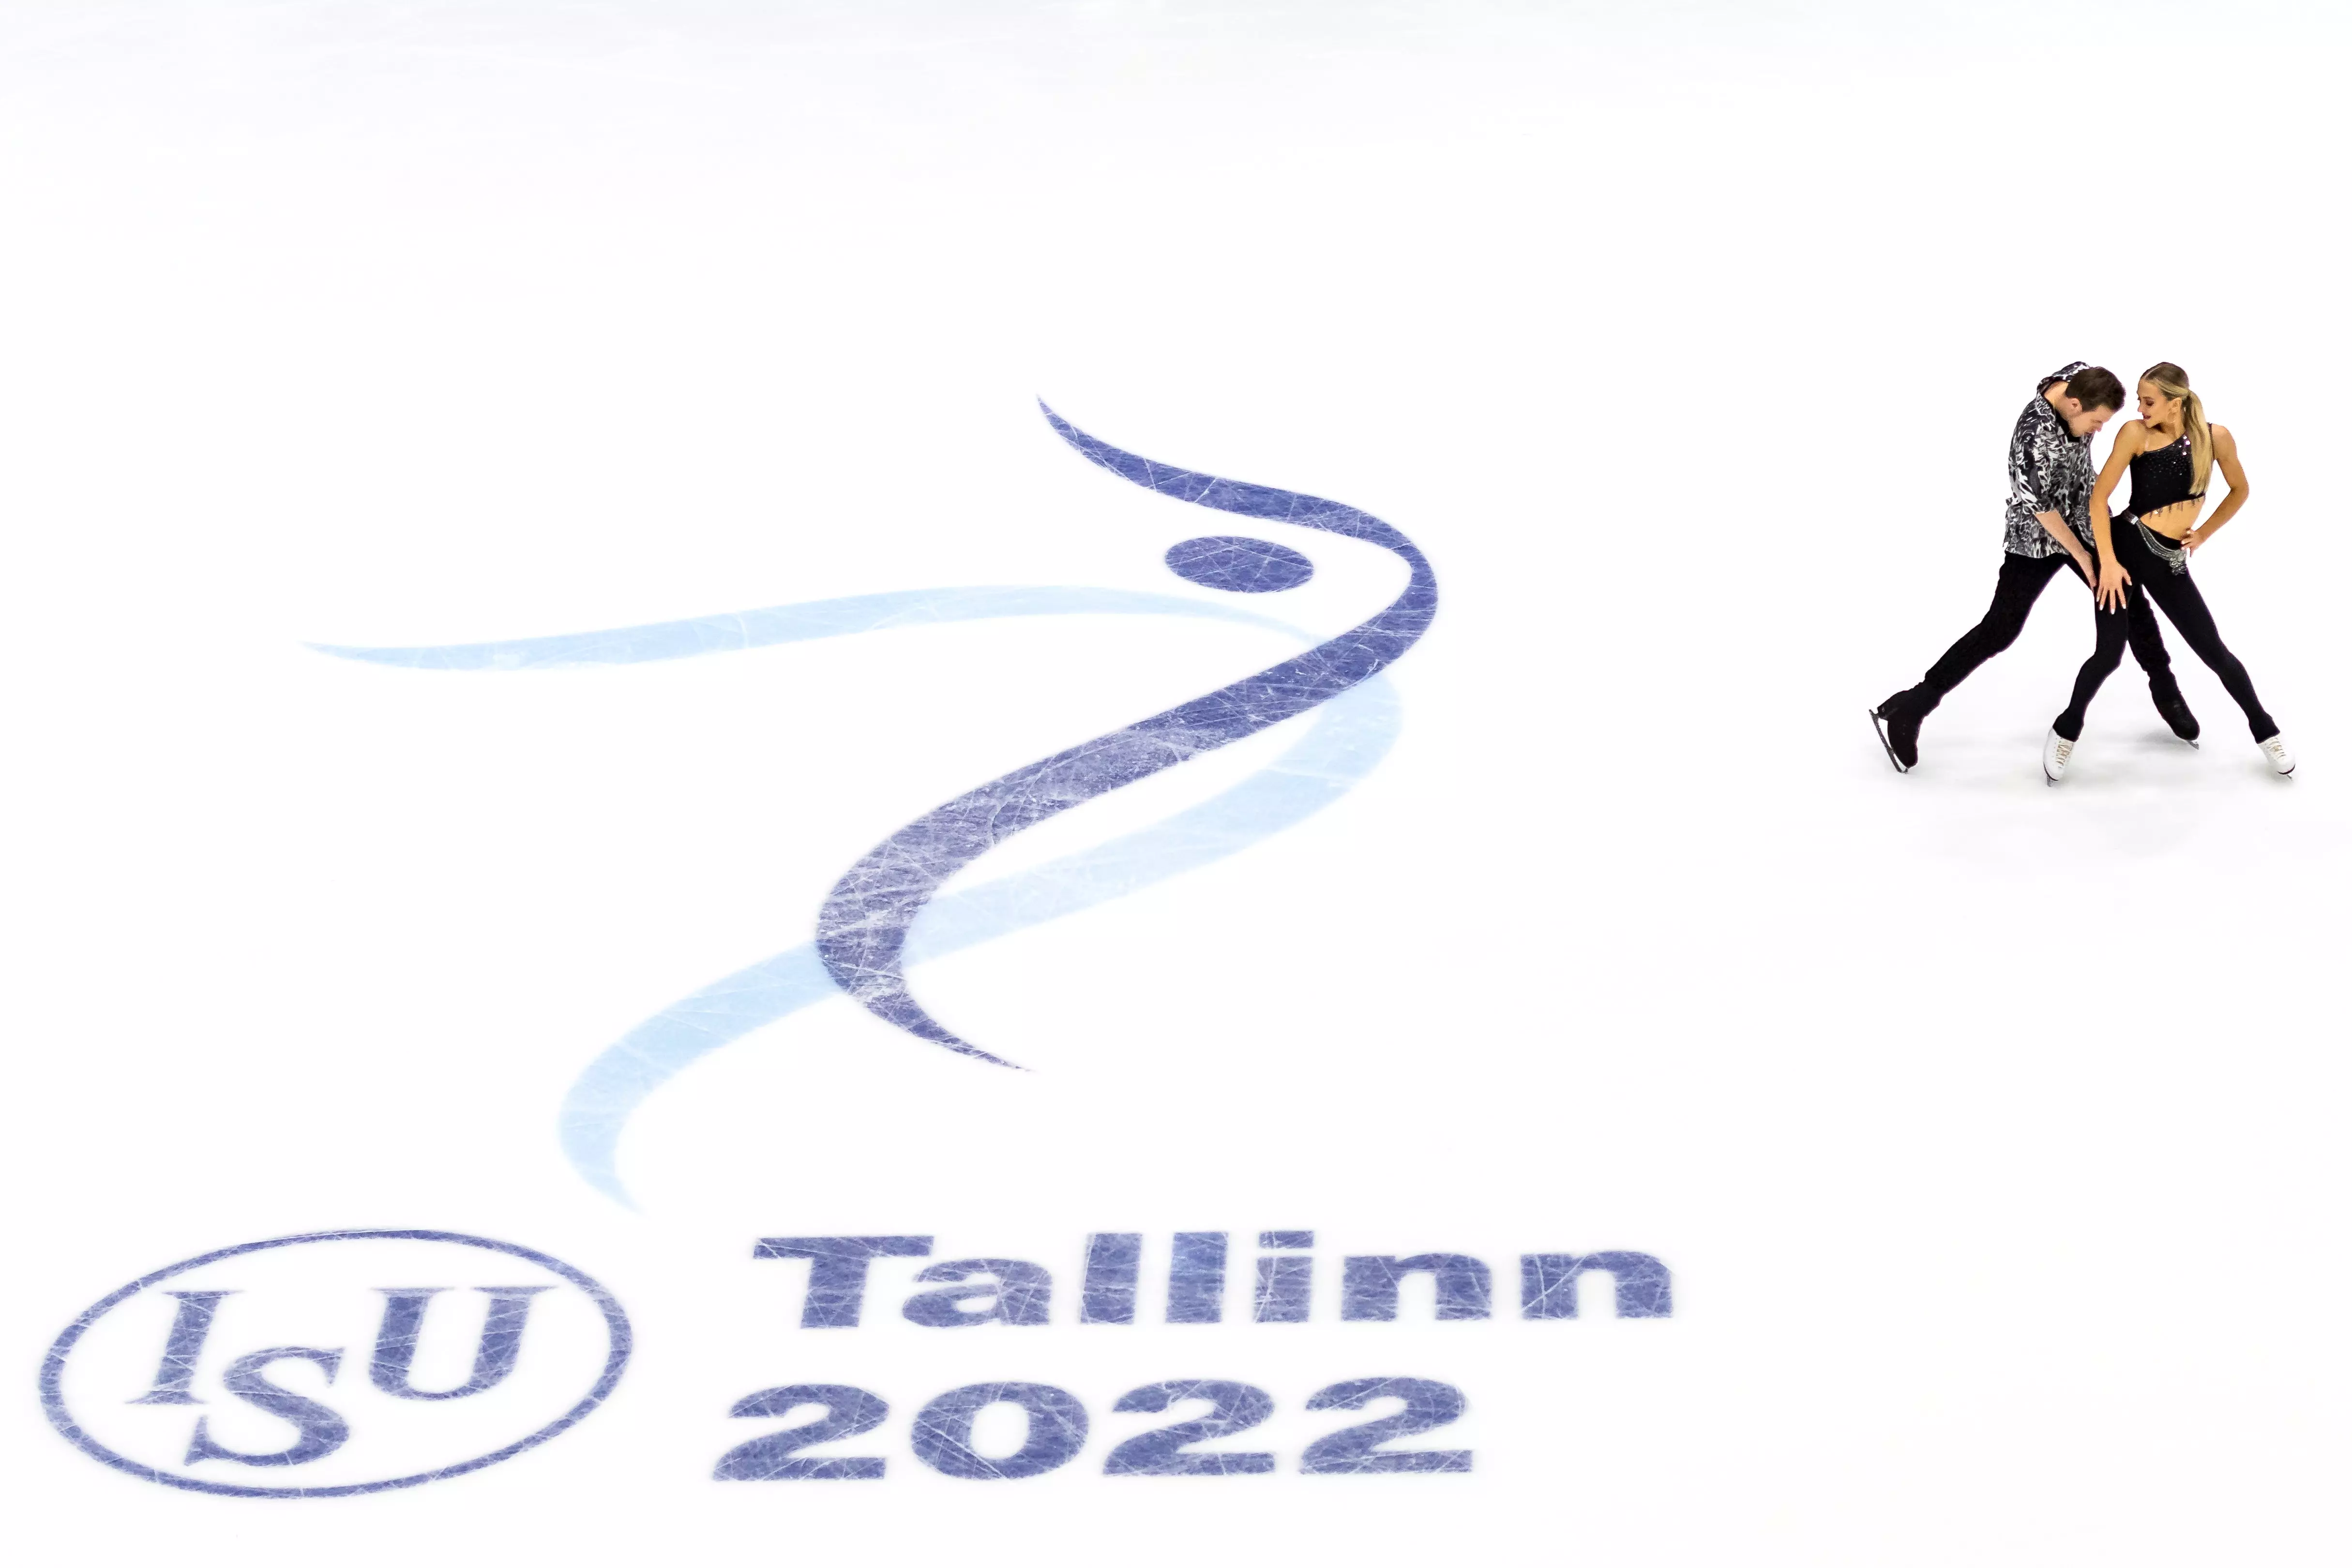 Victoria Sinitsina Nikita Katsalapov EFSC 2022 ©International Skating Union 2